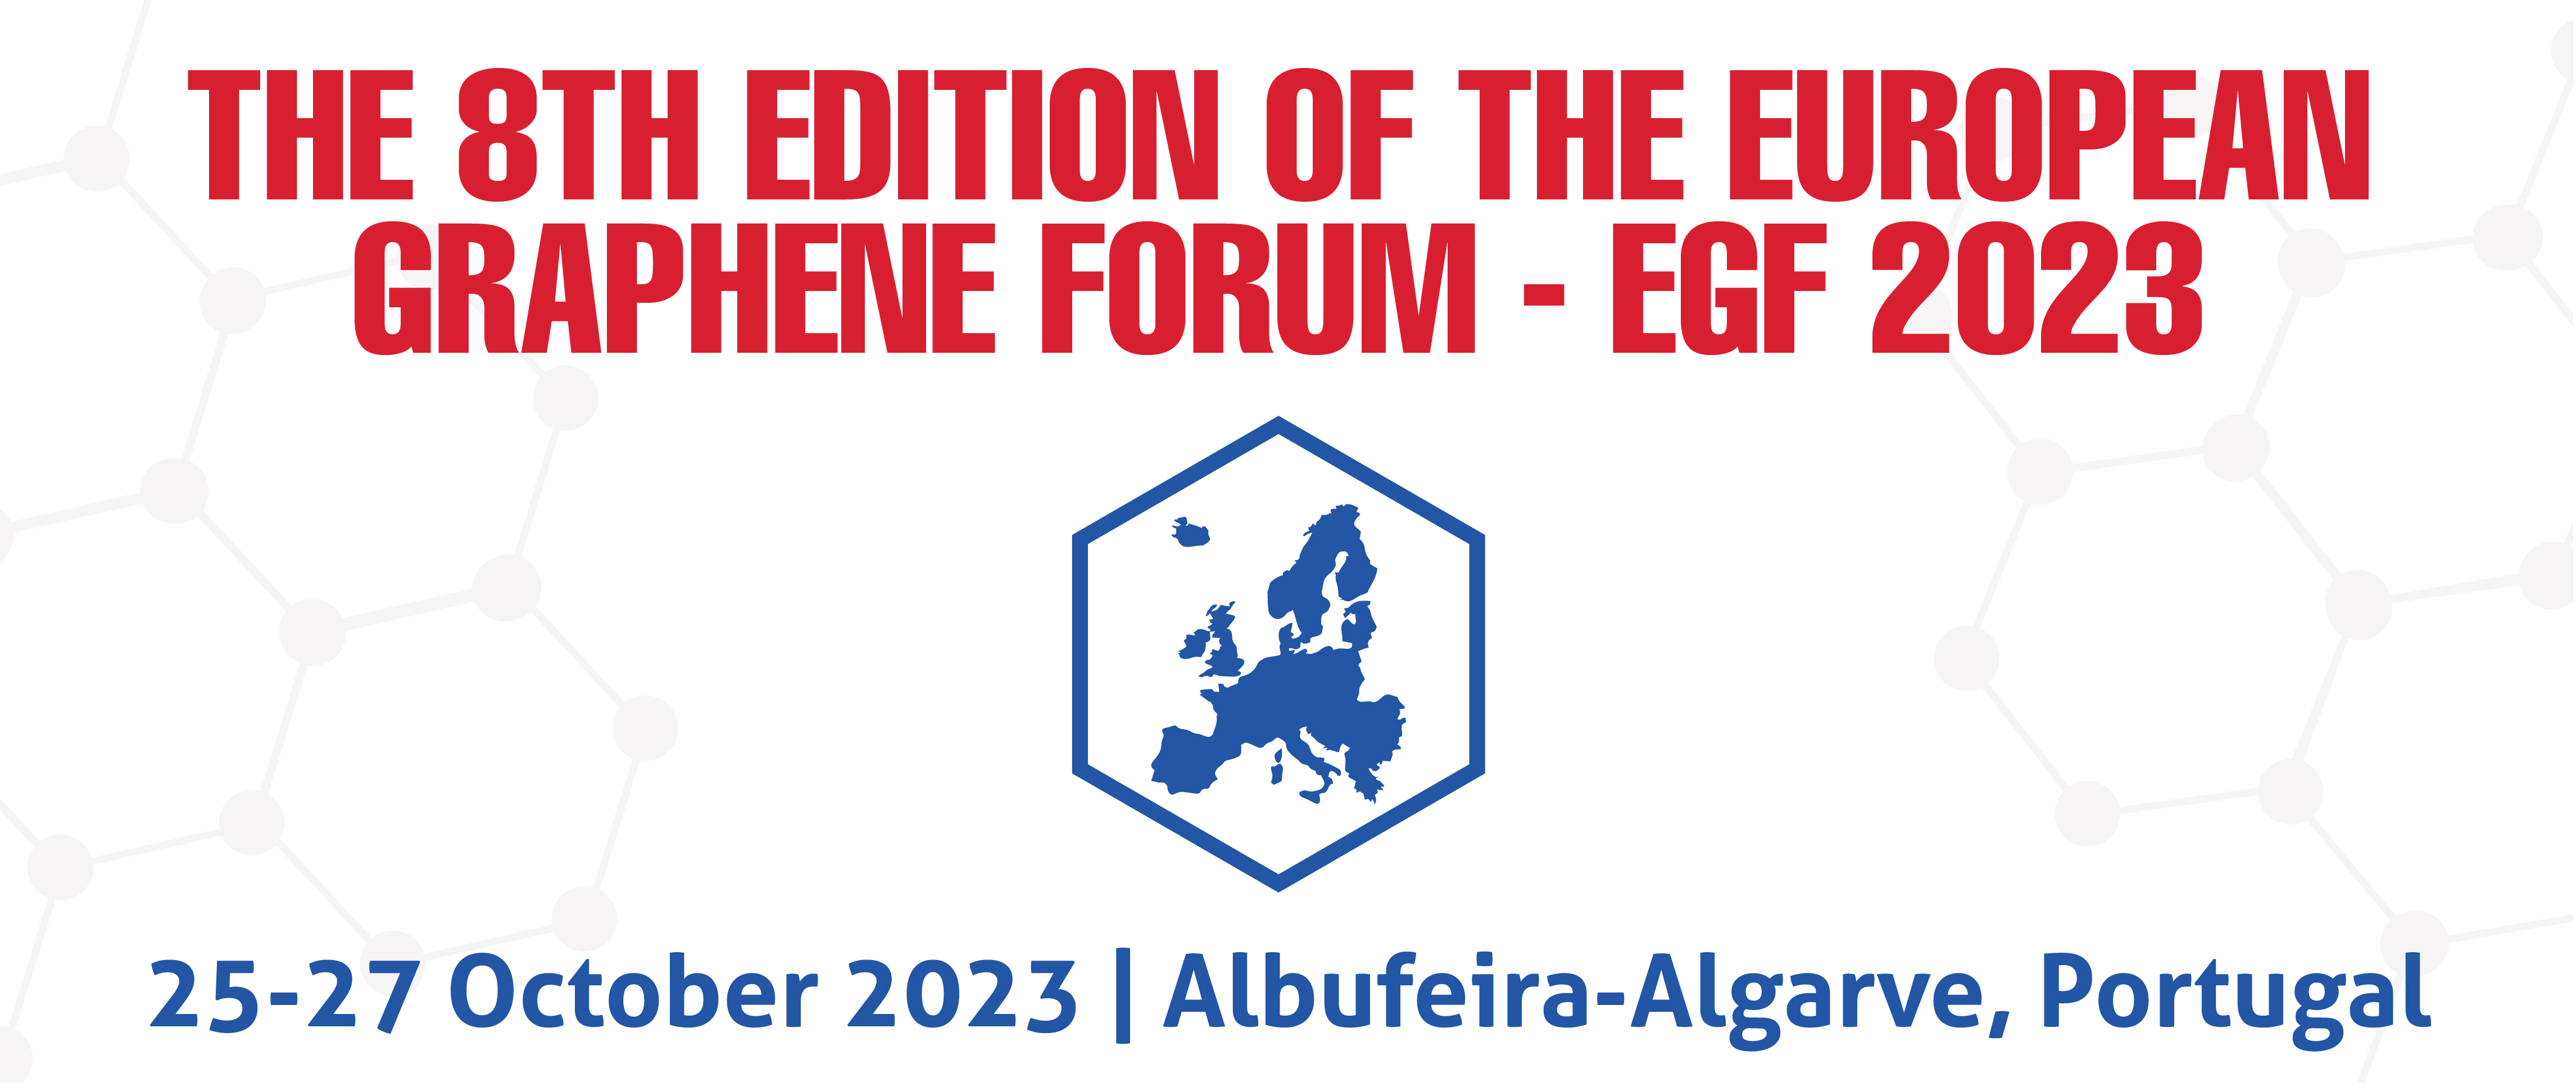 The 8th Ed. of the European Graphene Forum - EGF 2023